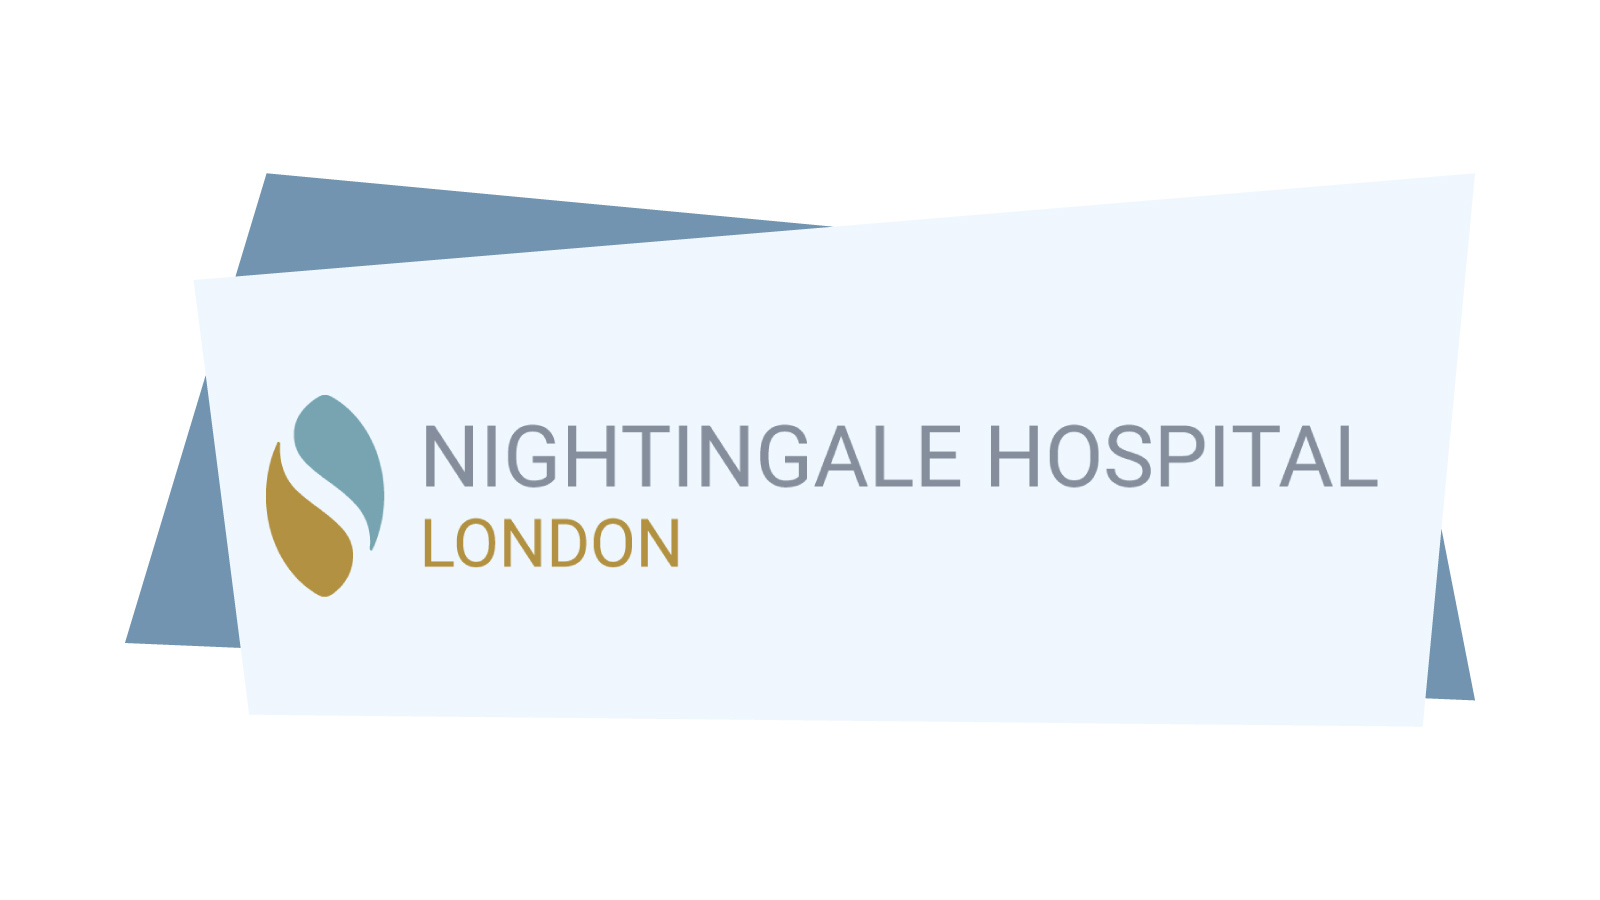 NightingaleHospital London